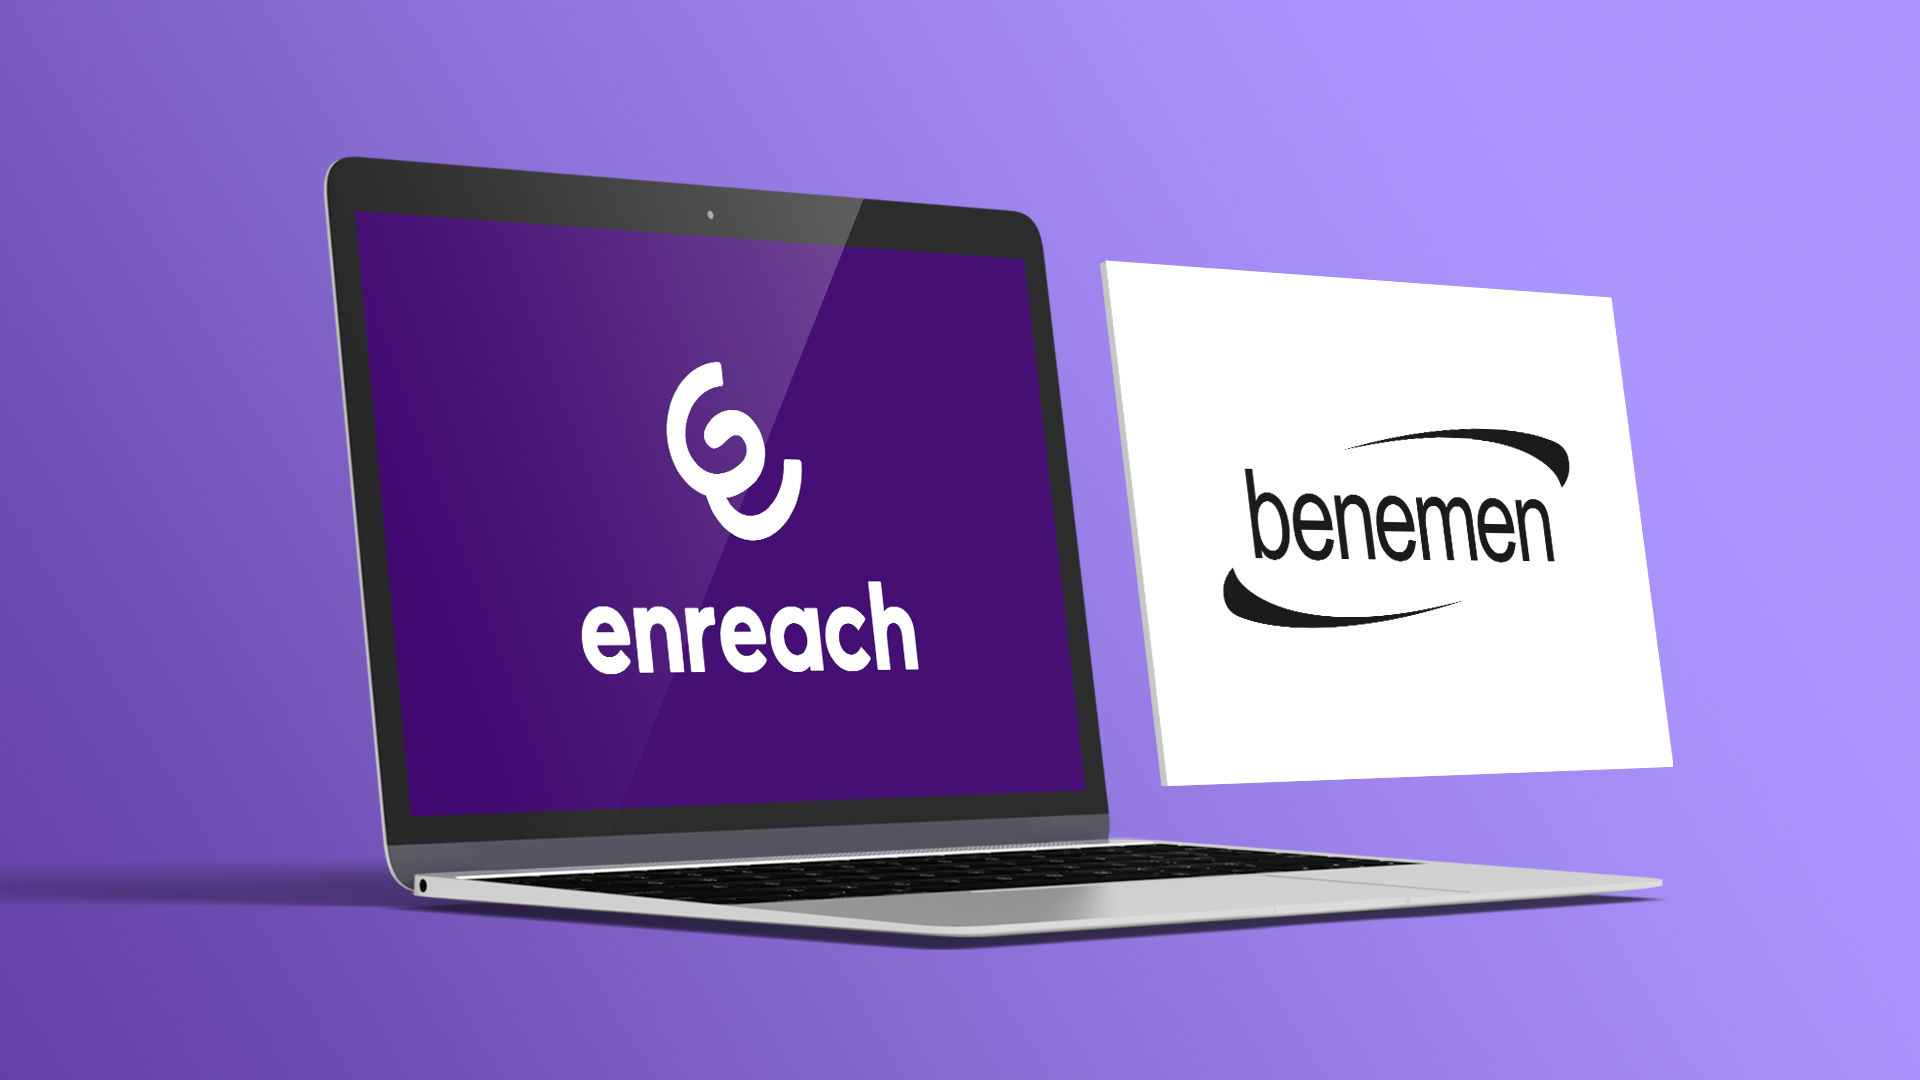 Benemen-logo-ja-Enreach-logo